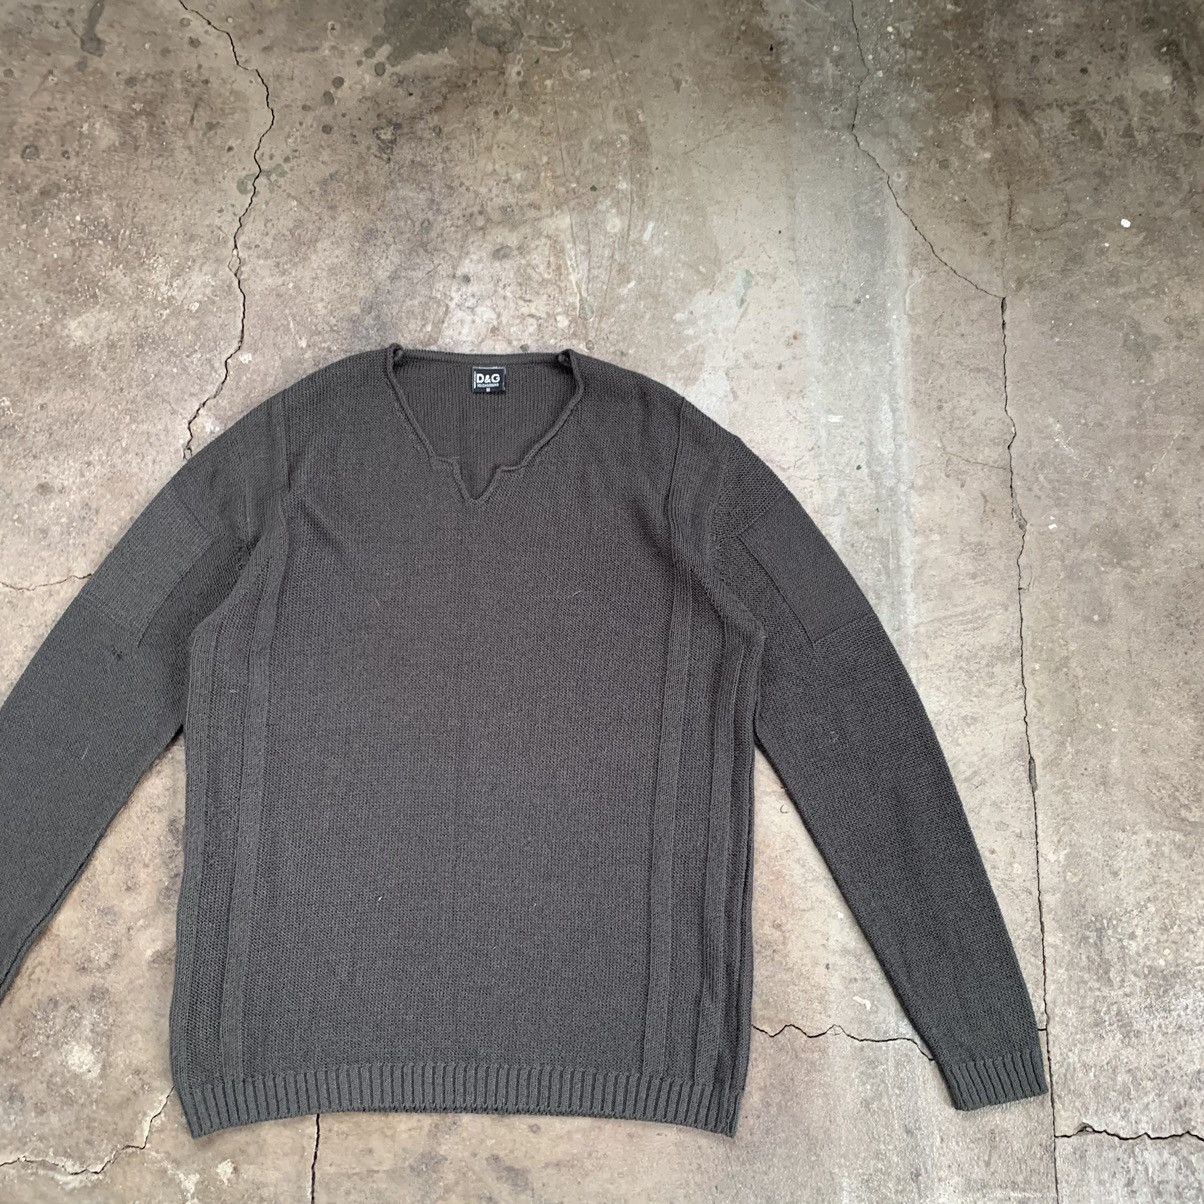 Vintage Dolce and gabbana vintage mesh sweater Size US M / EU 48-50 / 2 - 3 Thumbnail